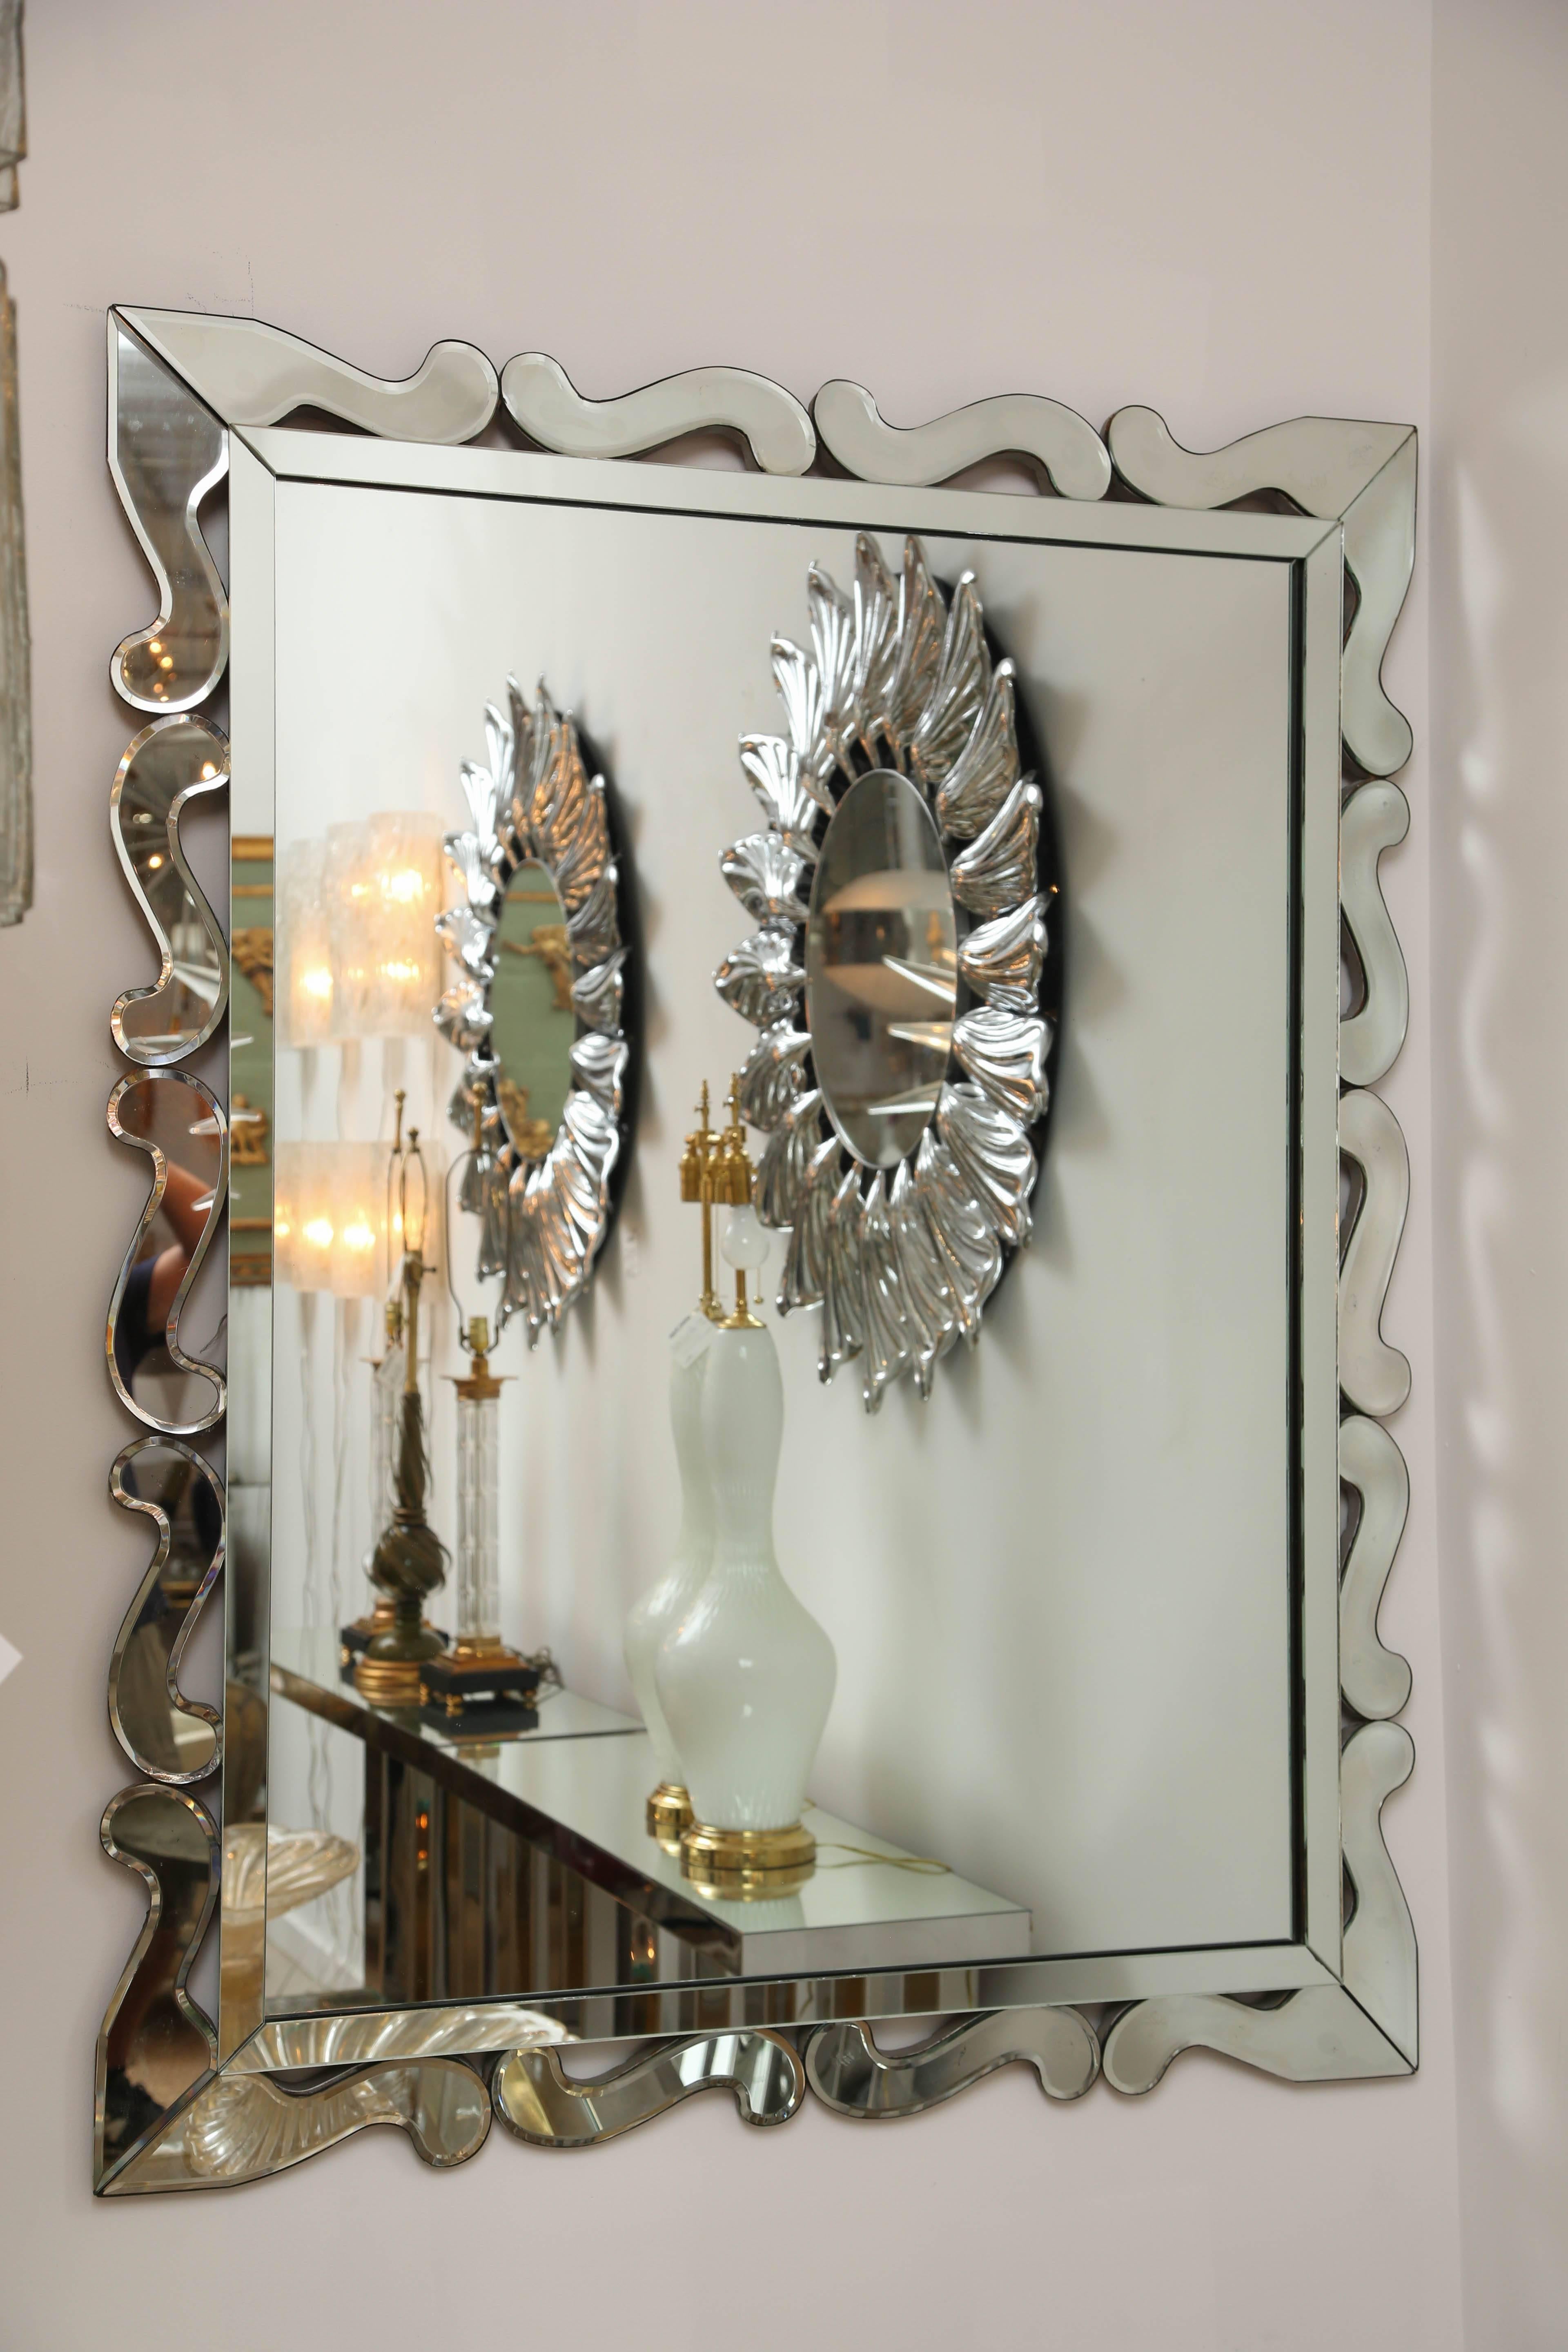 Art Deco mirror with scalloped edge.